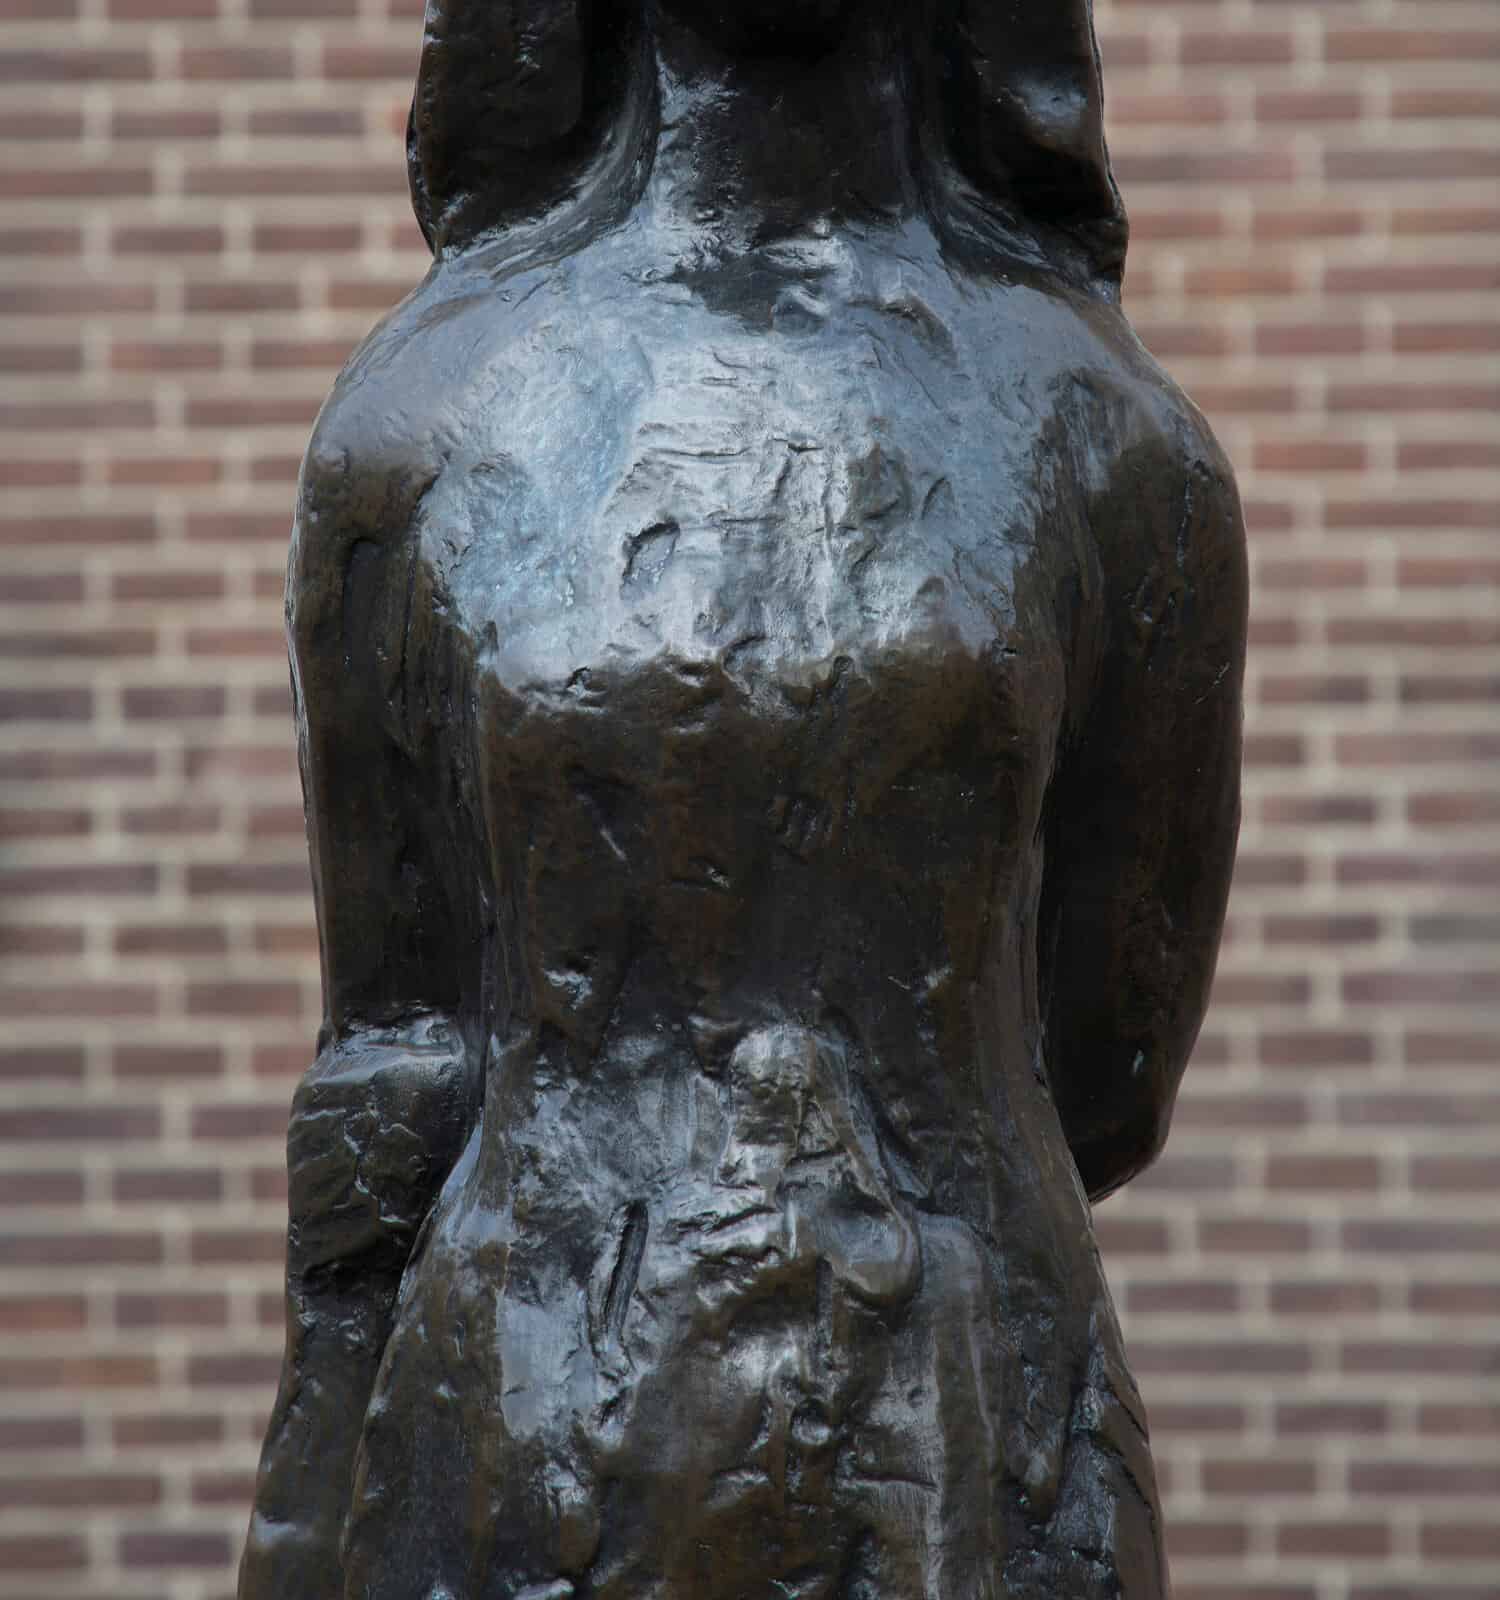 Anne Frank statue in Amsterdam (Netherlands)